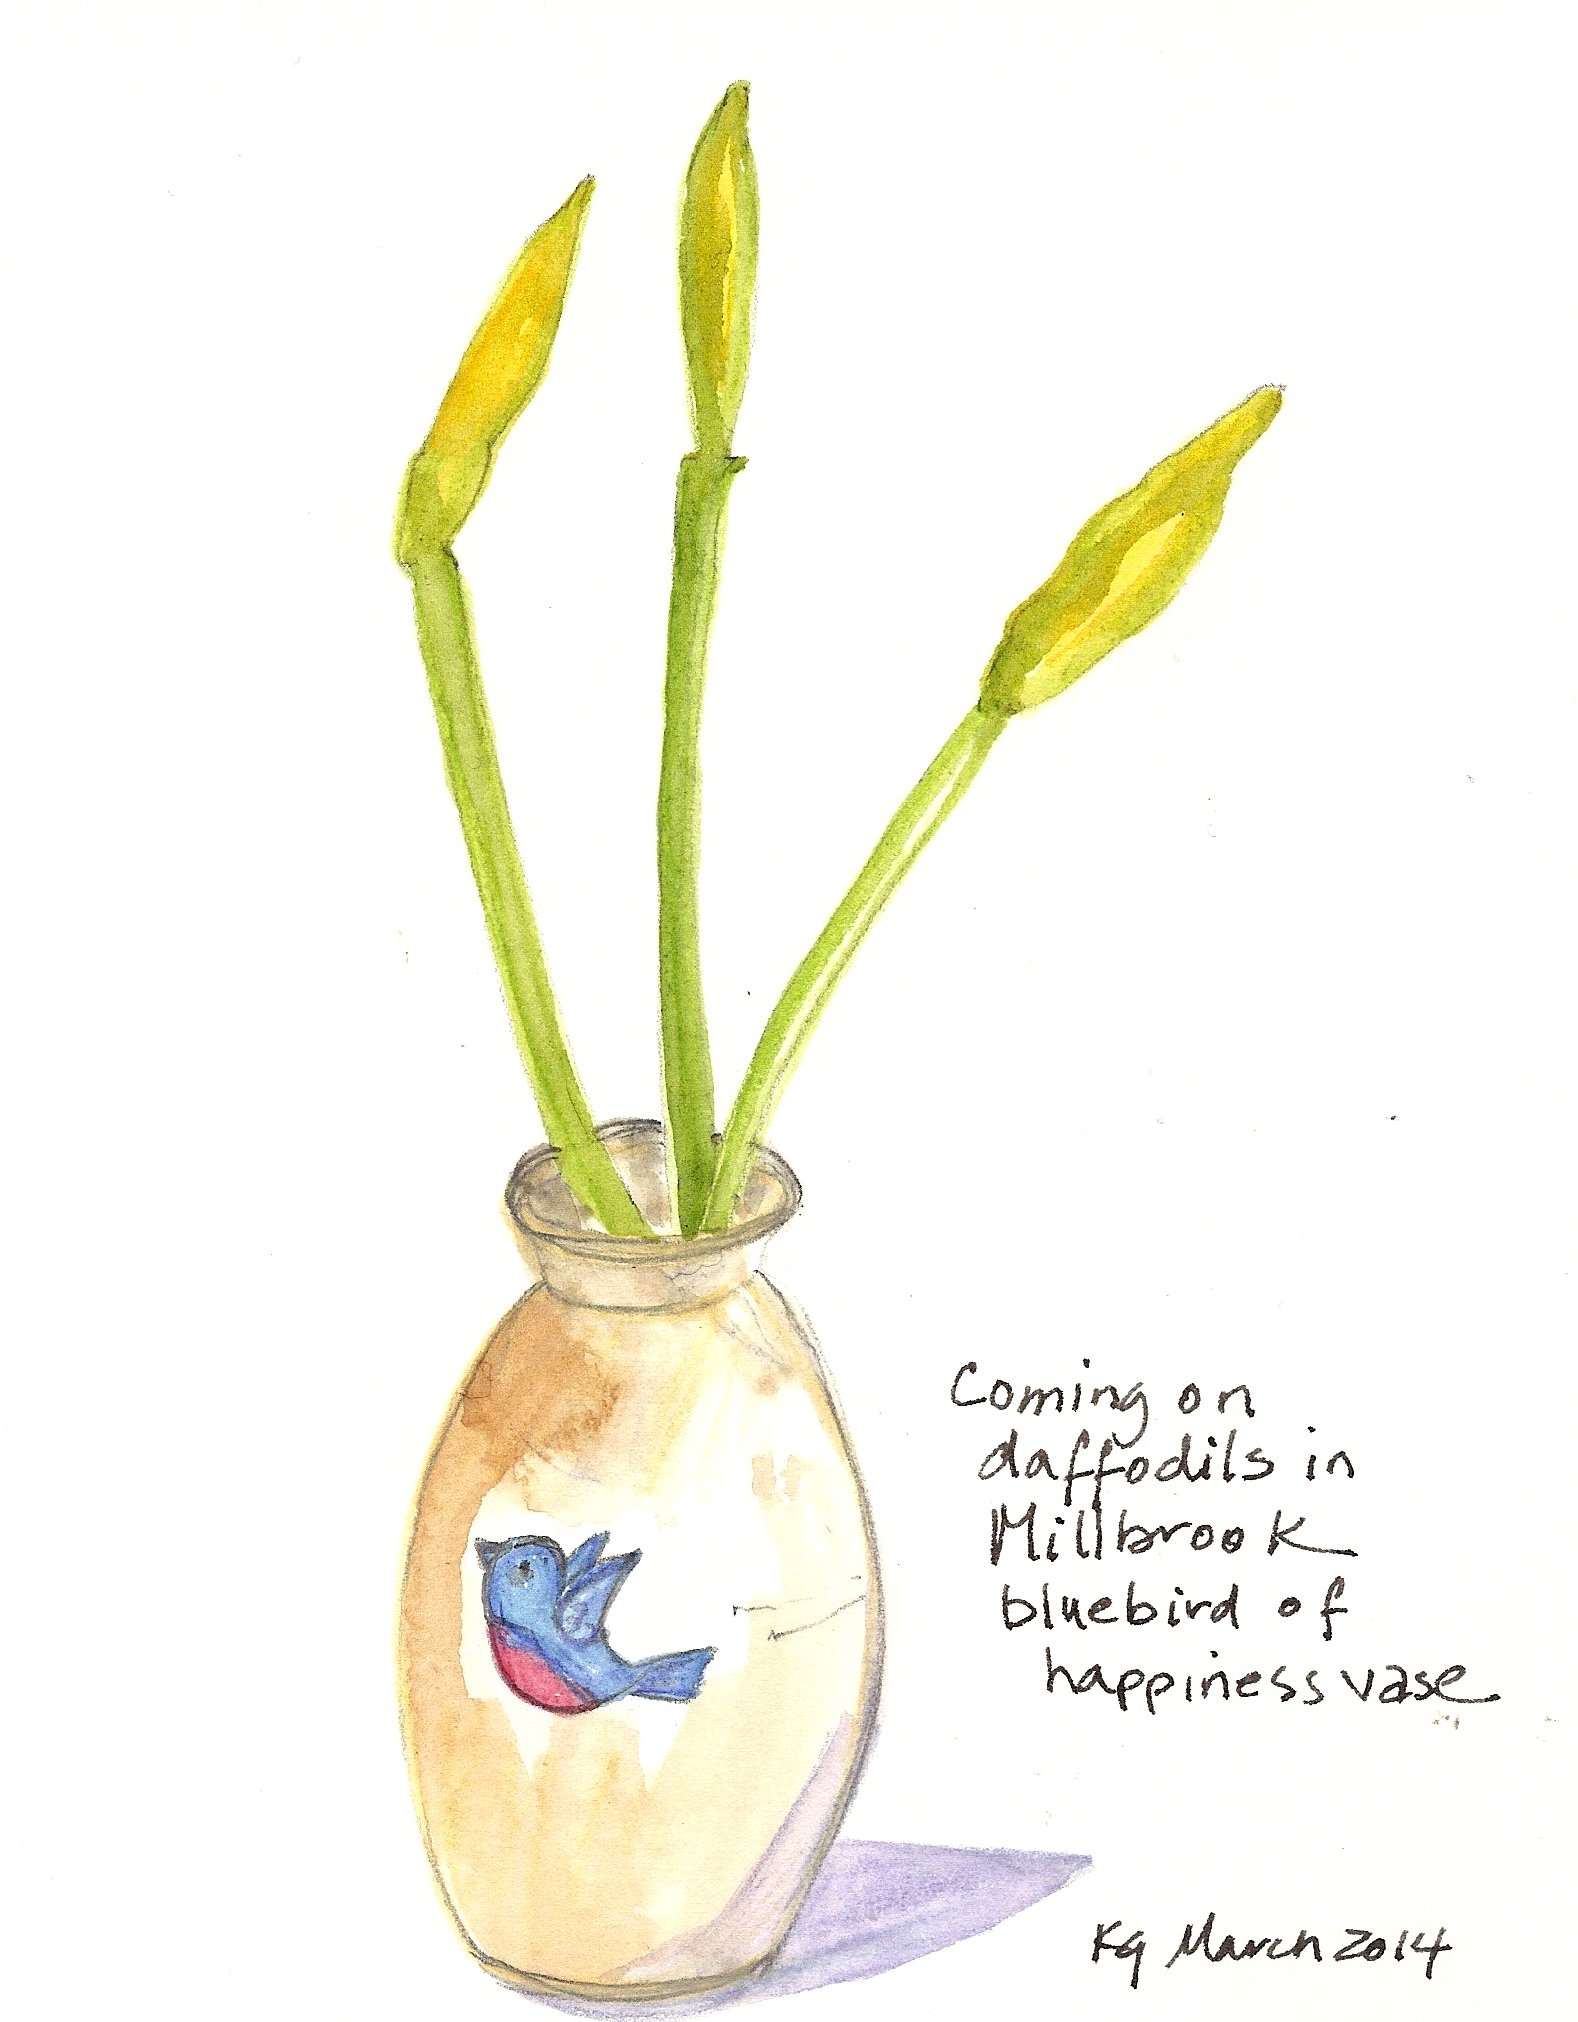 Daffodils in Millbrook vase